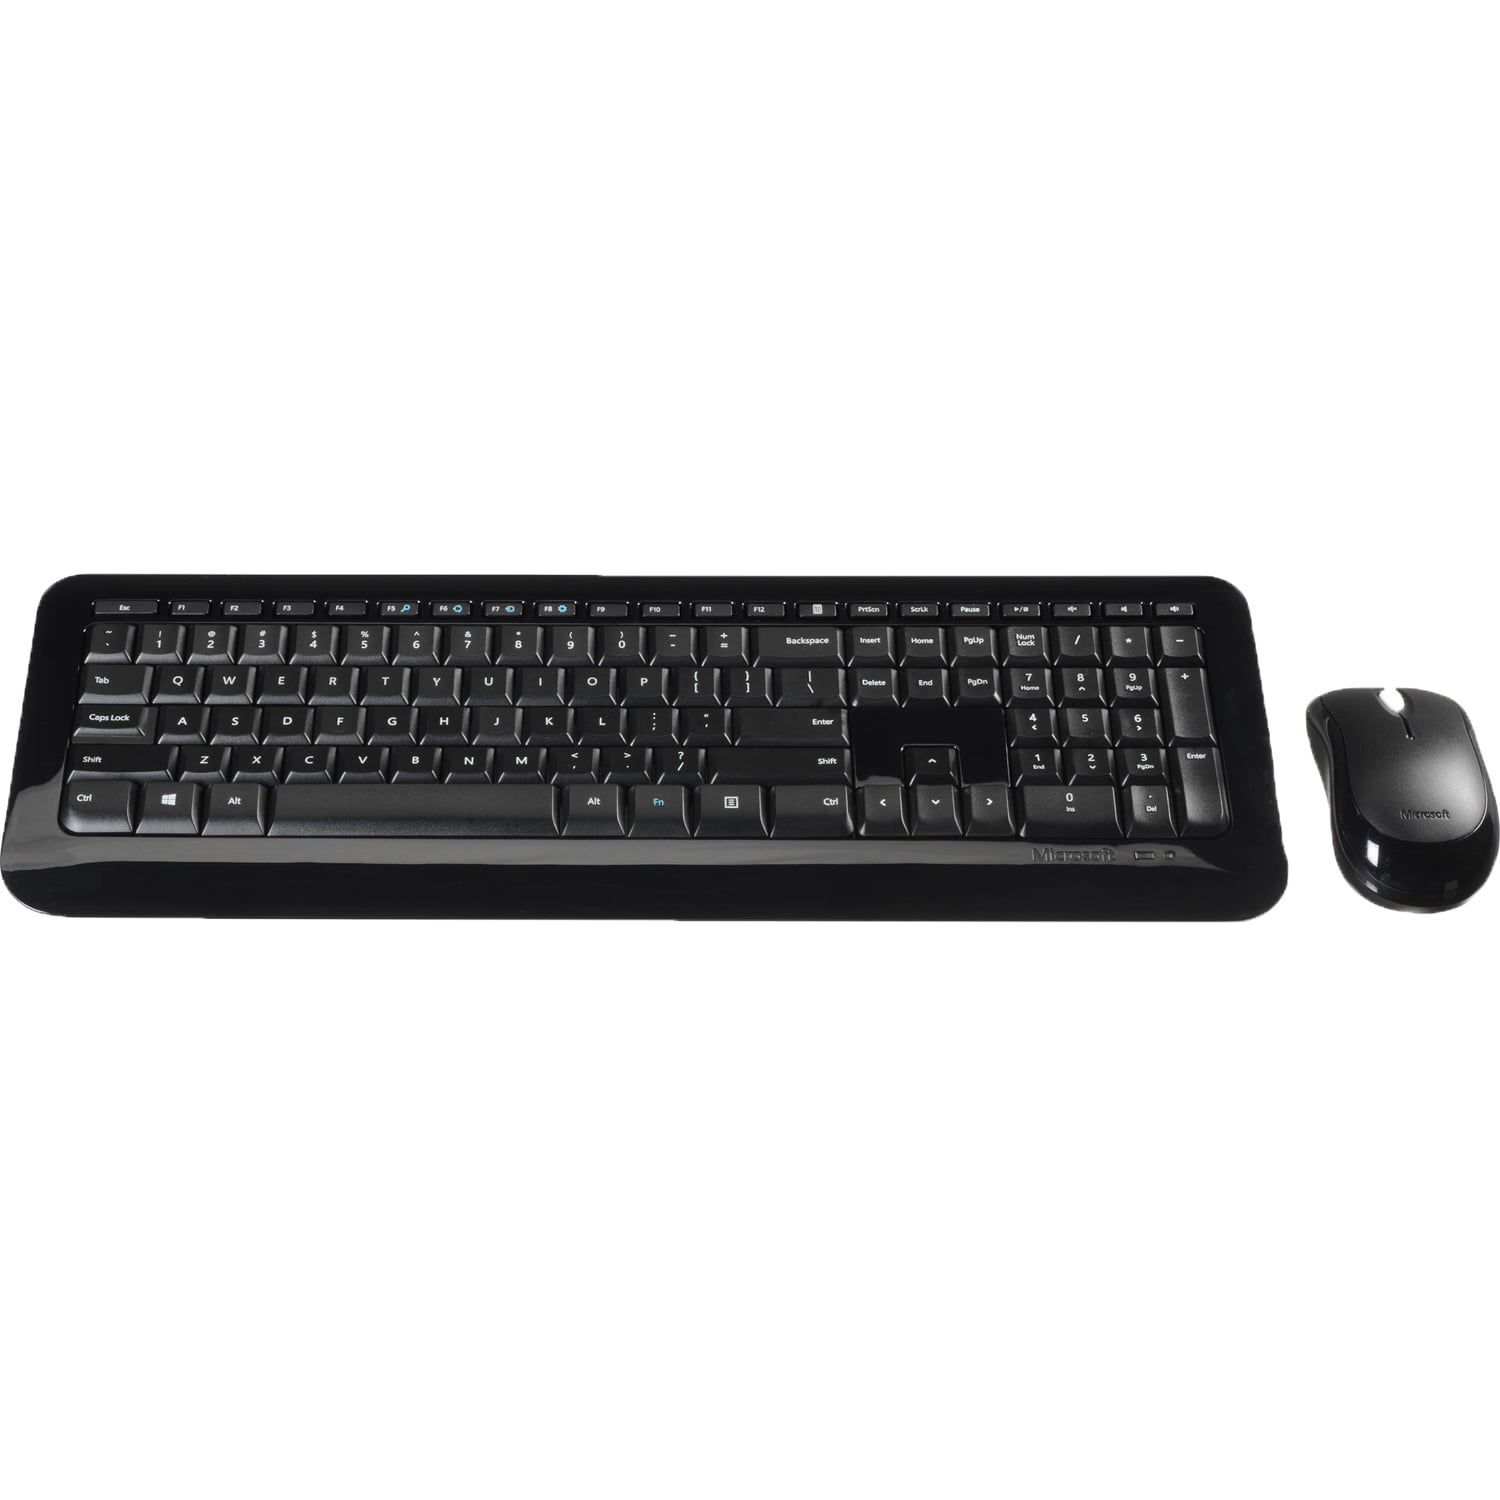 NEW Microsoft PY9-00001 Wireless Desktop 850 Keyboard and mouse 